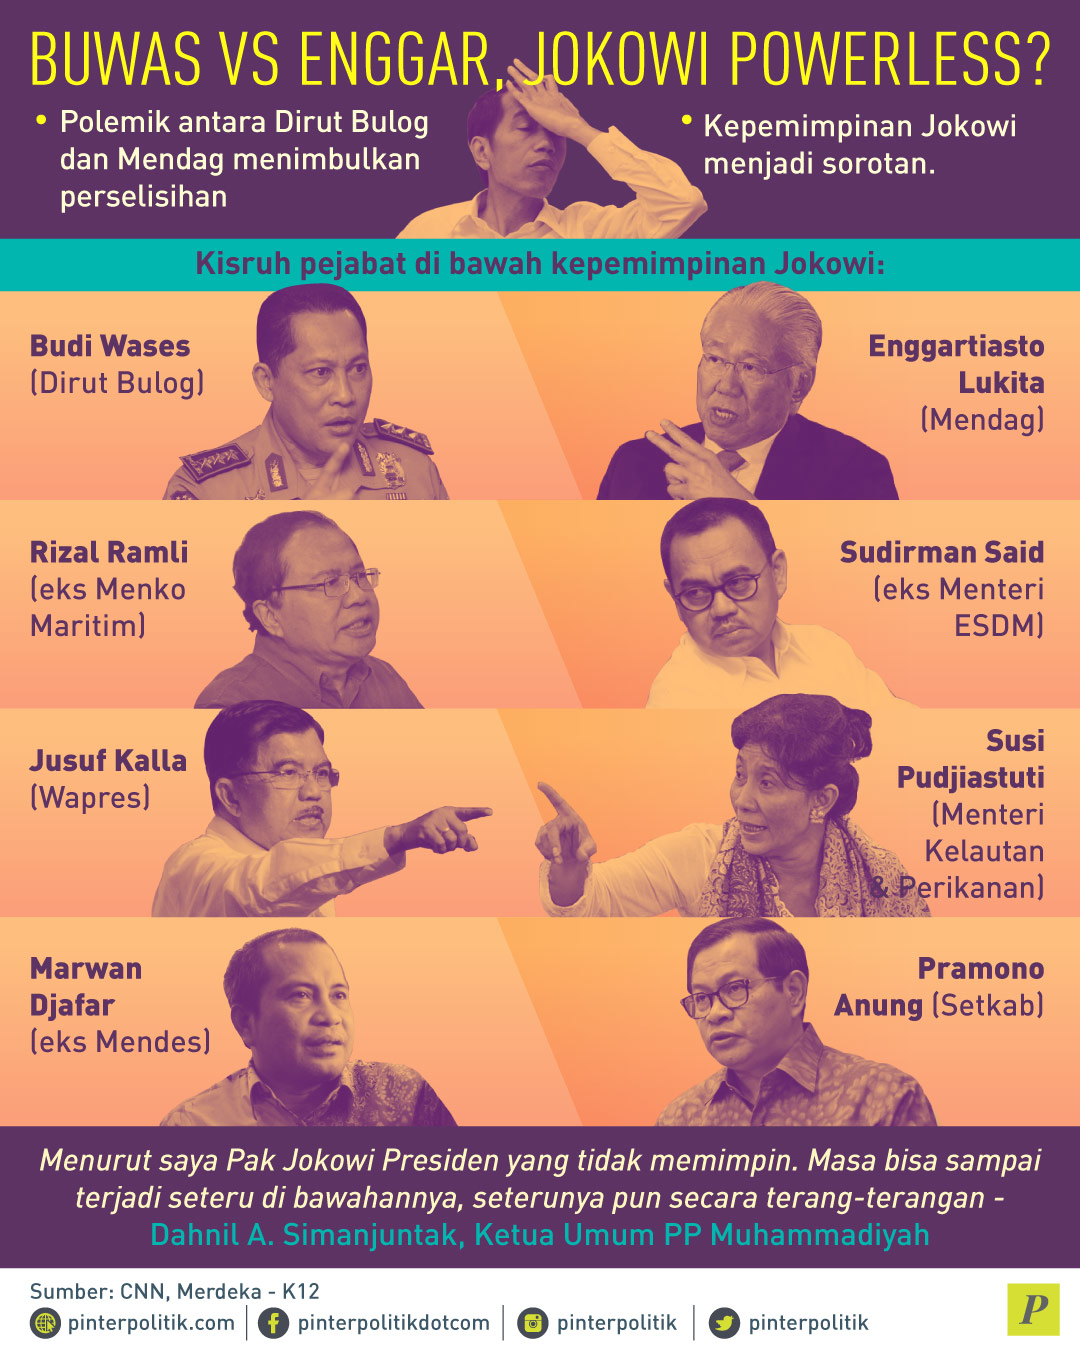 Anak Buah Berseteru, Jokowi Lemah?